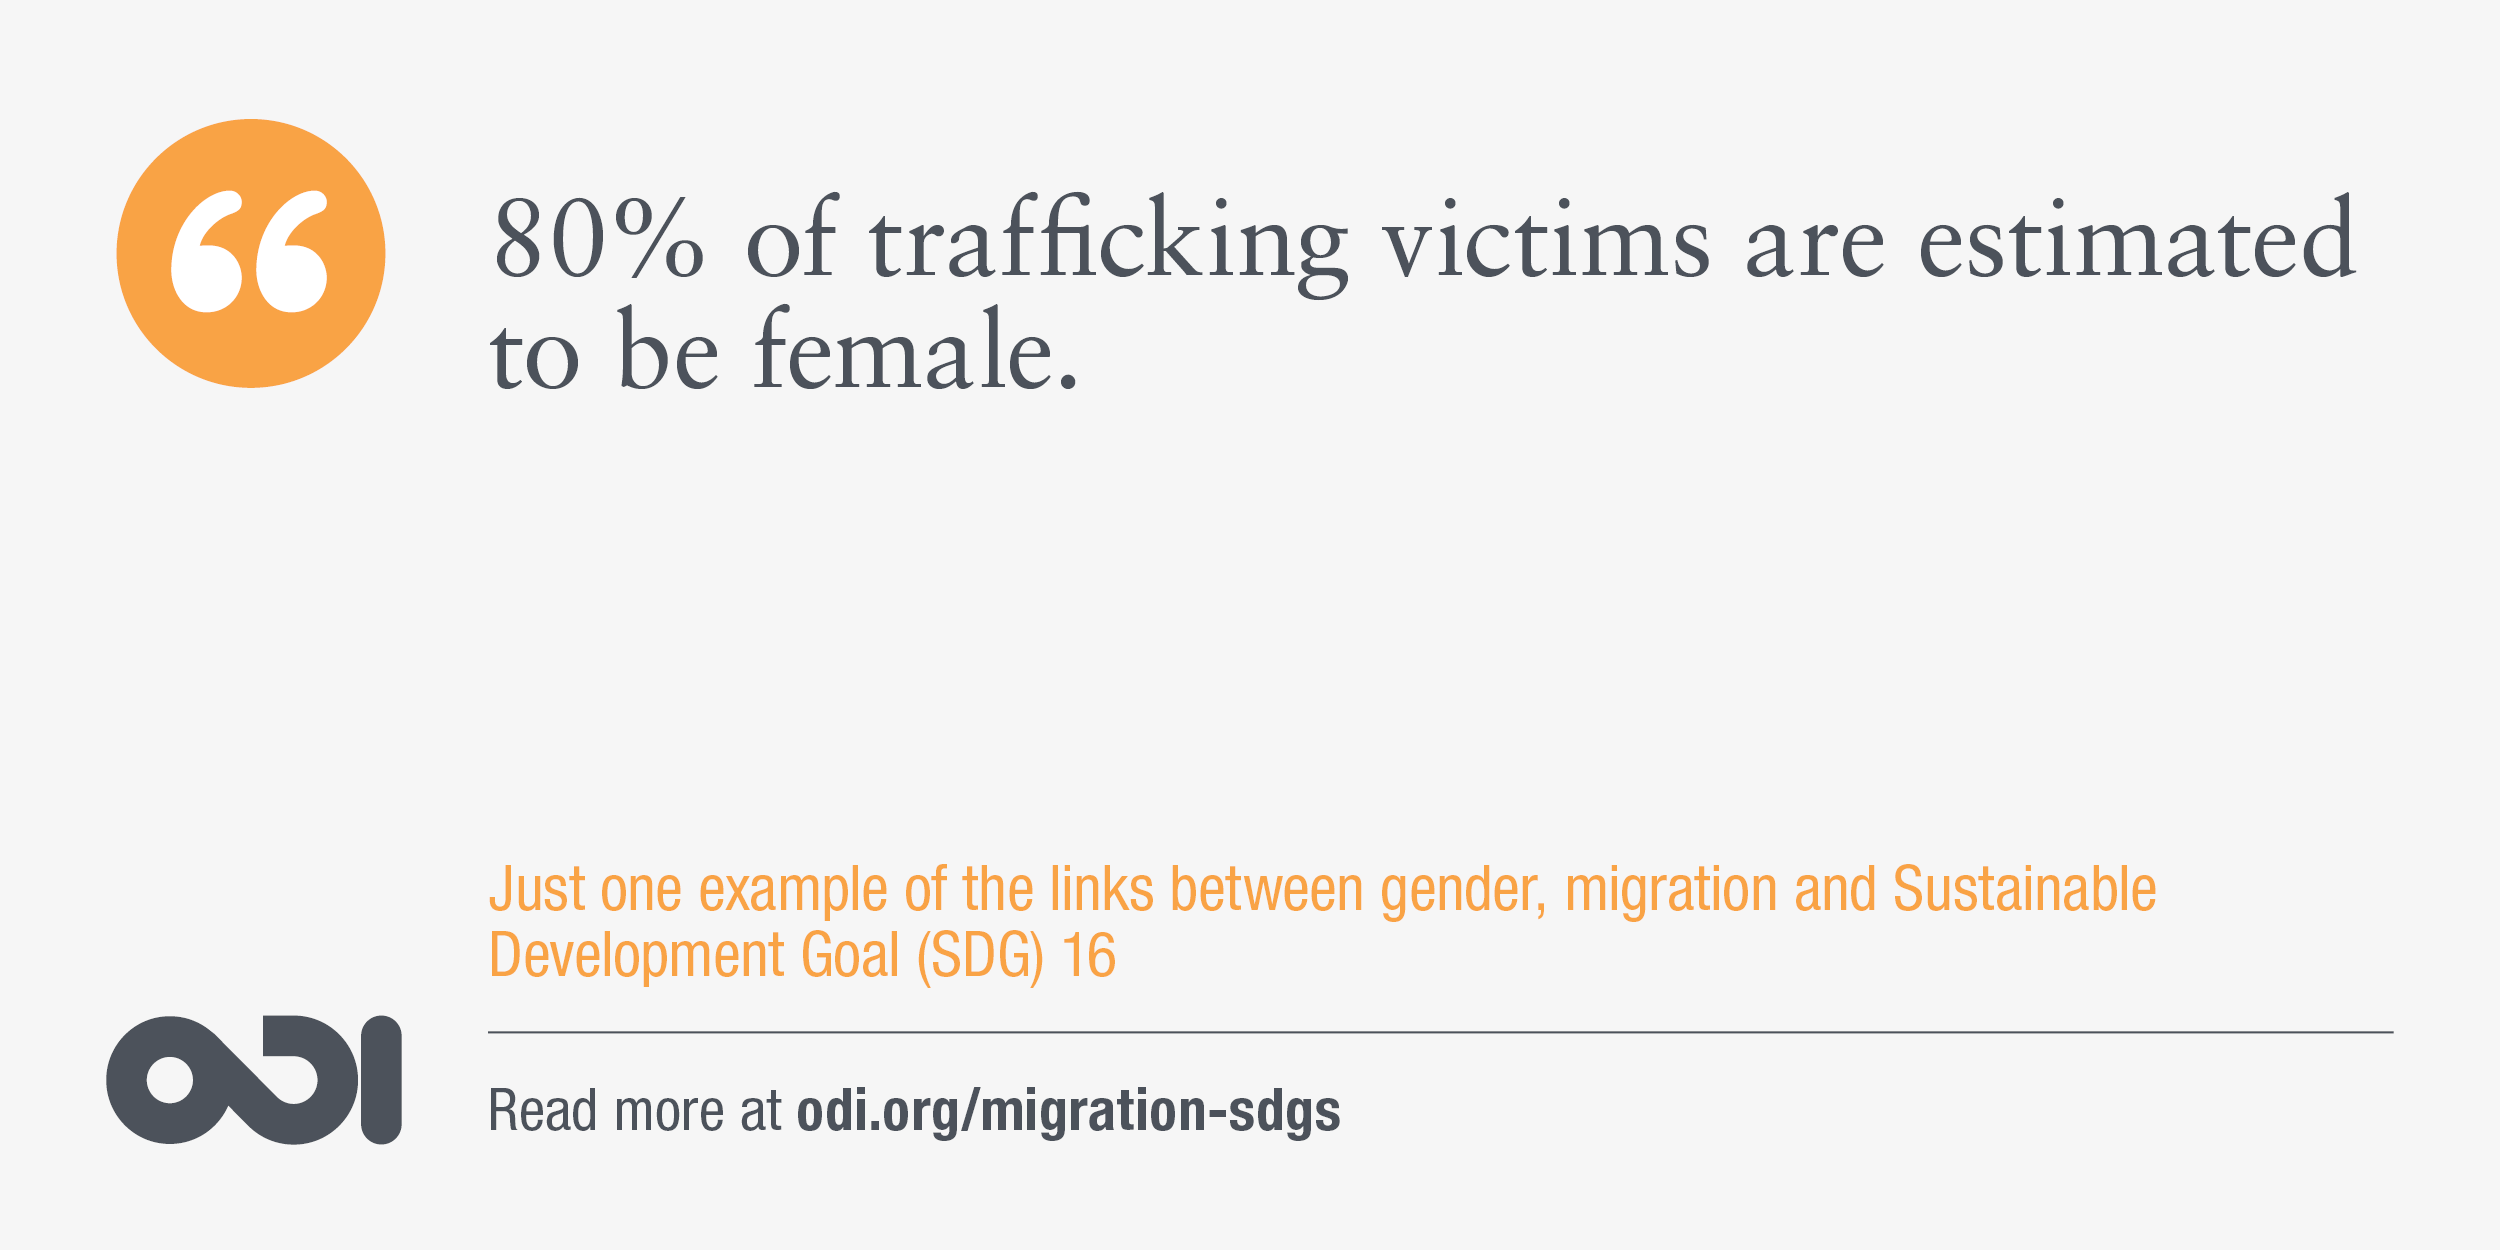 The links between gender, migration and SDG 16.